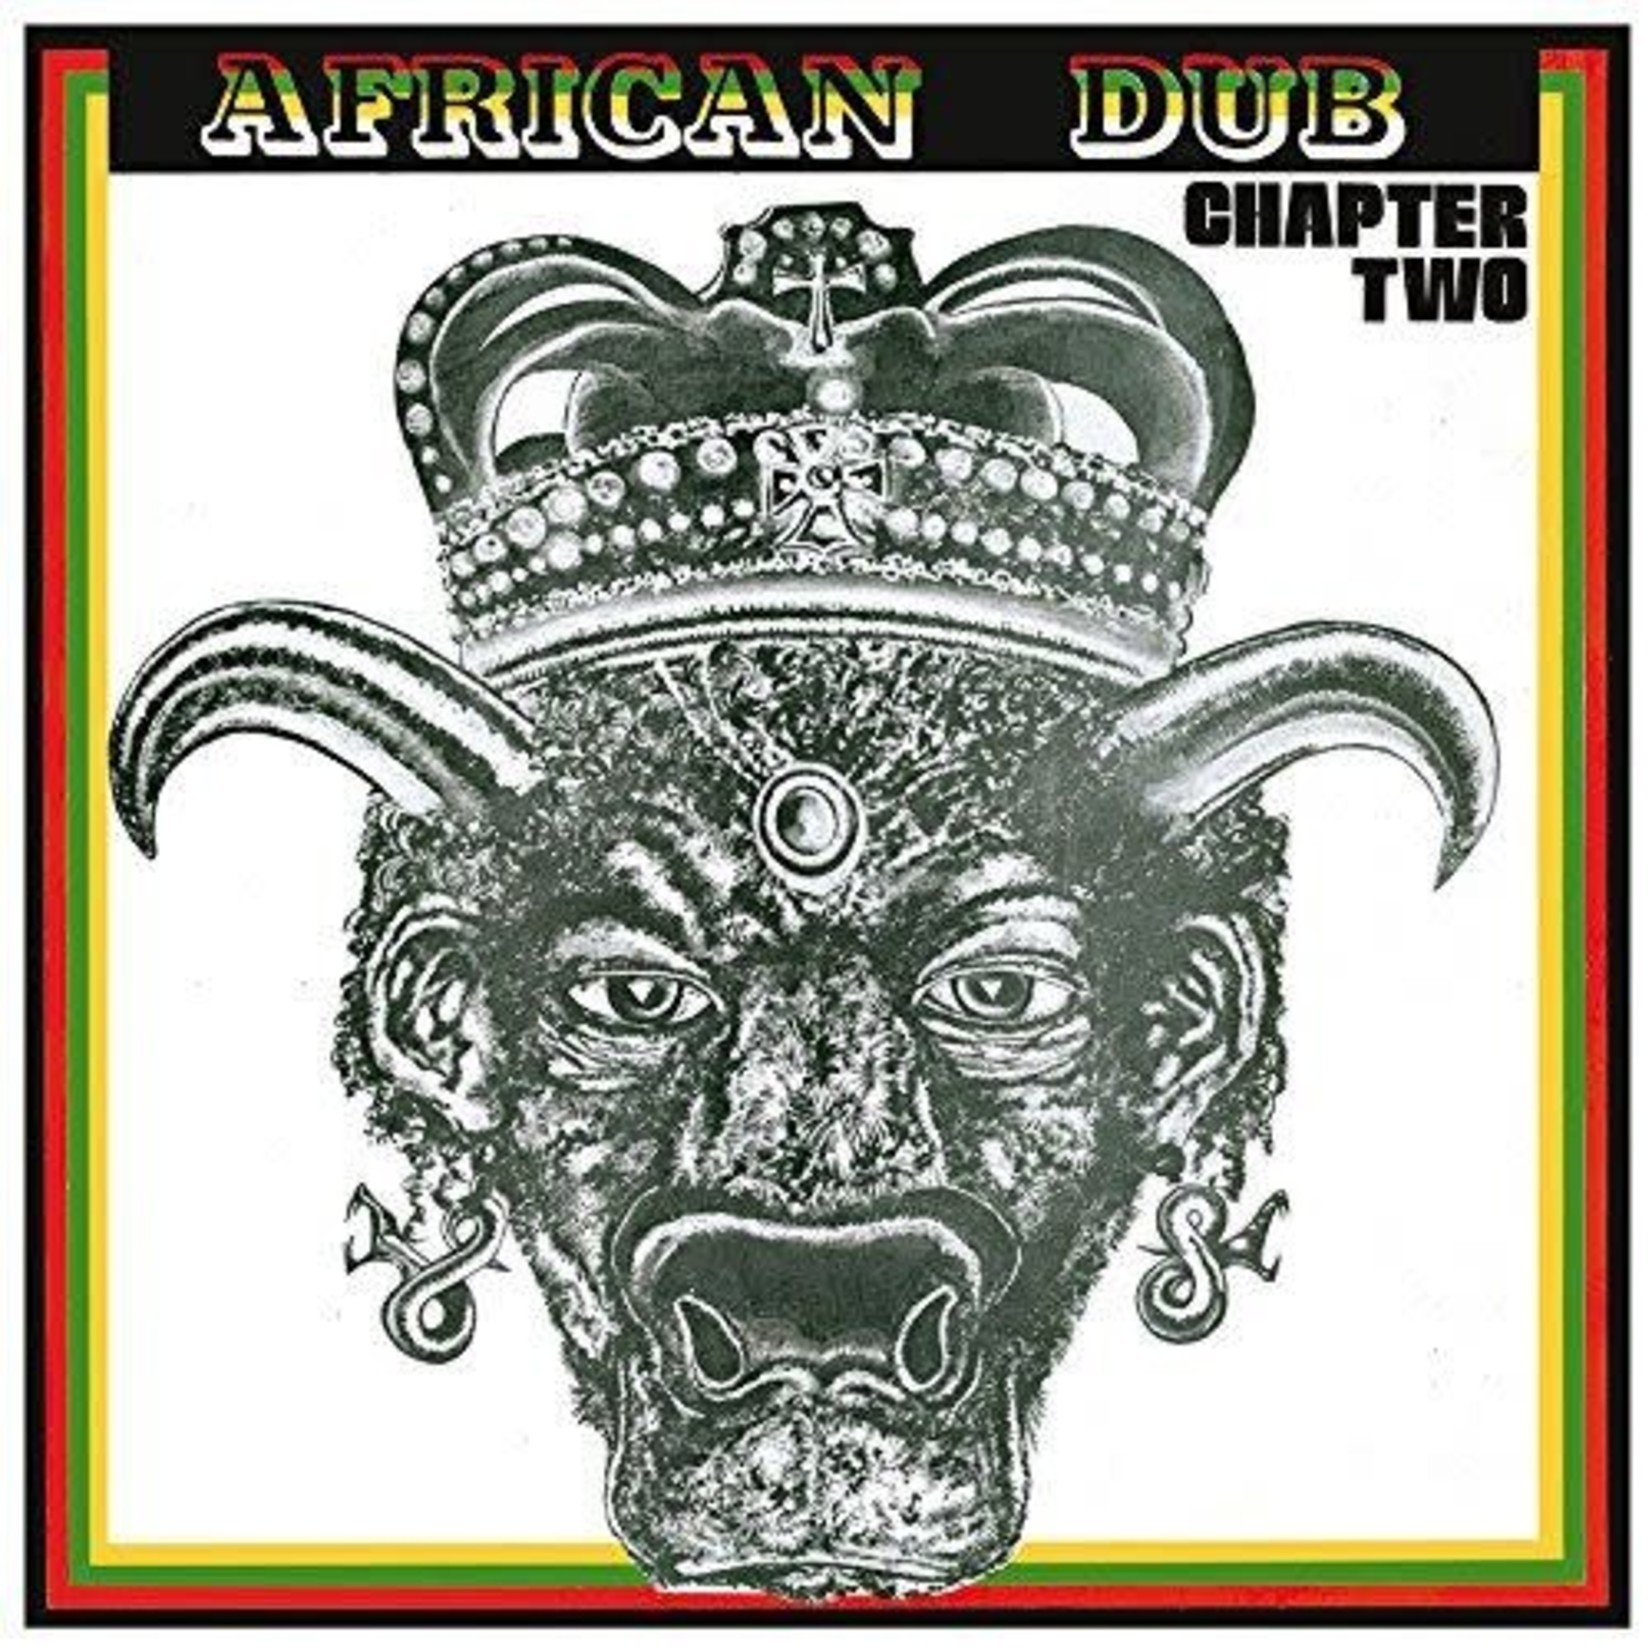 [New] Joe Gibbs - African Dub Chapter 2